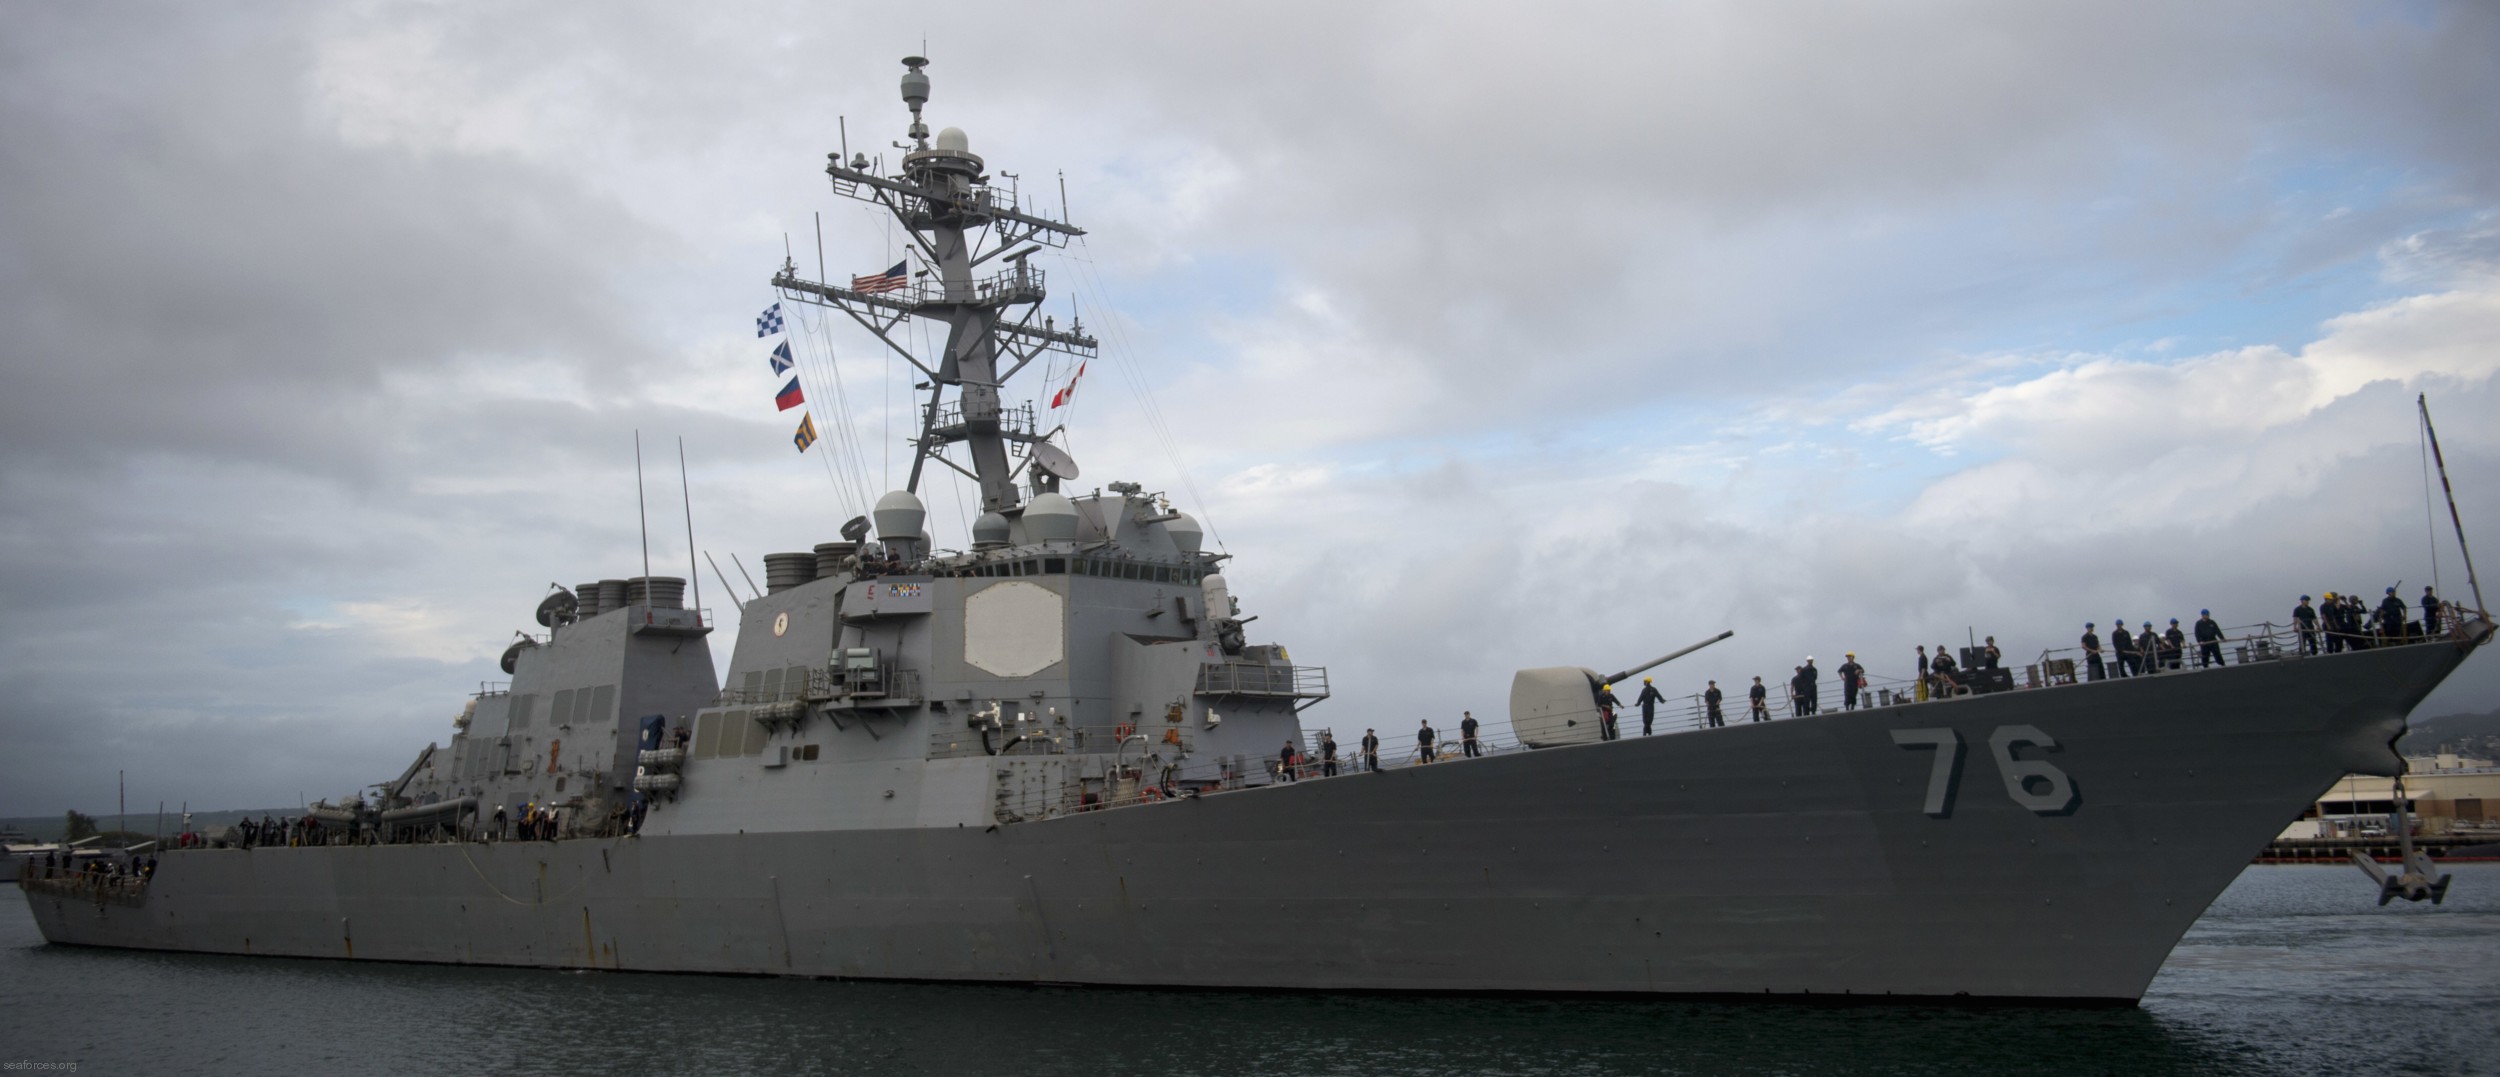 ddg-76 uss higgins guided missile destroyer arleigh burke class aegis navy 05 pearl harbor hawaii